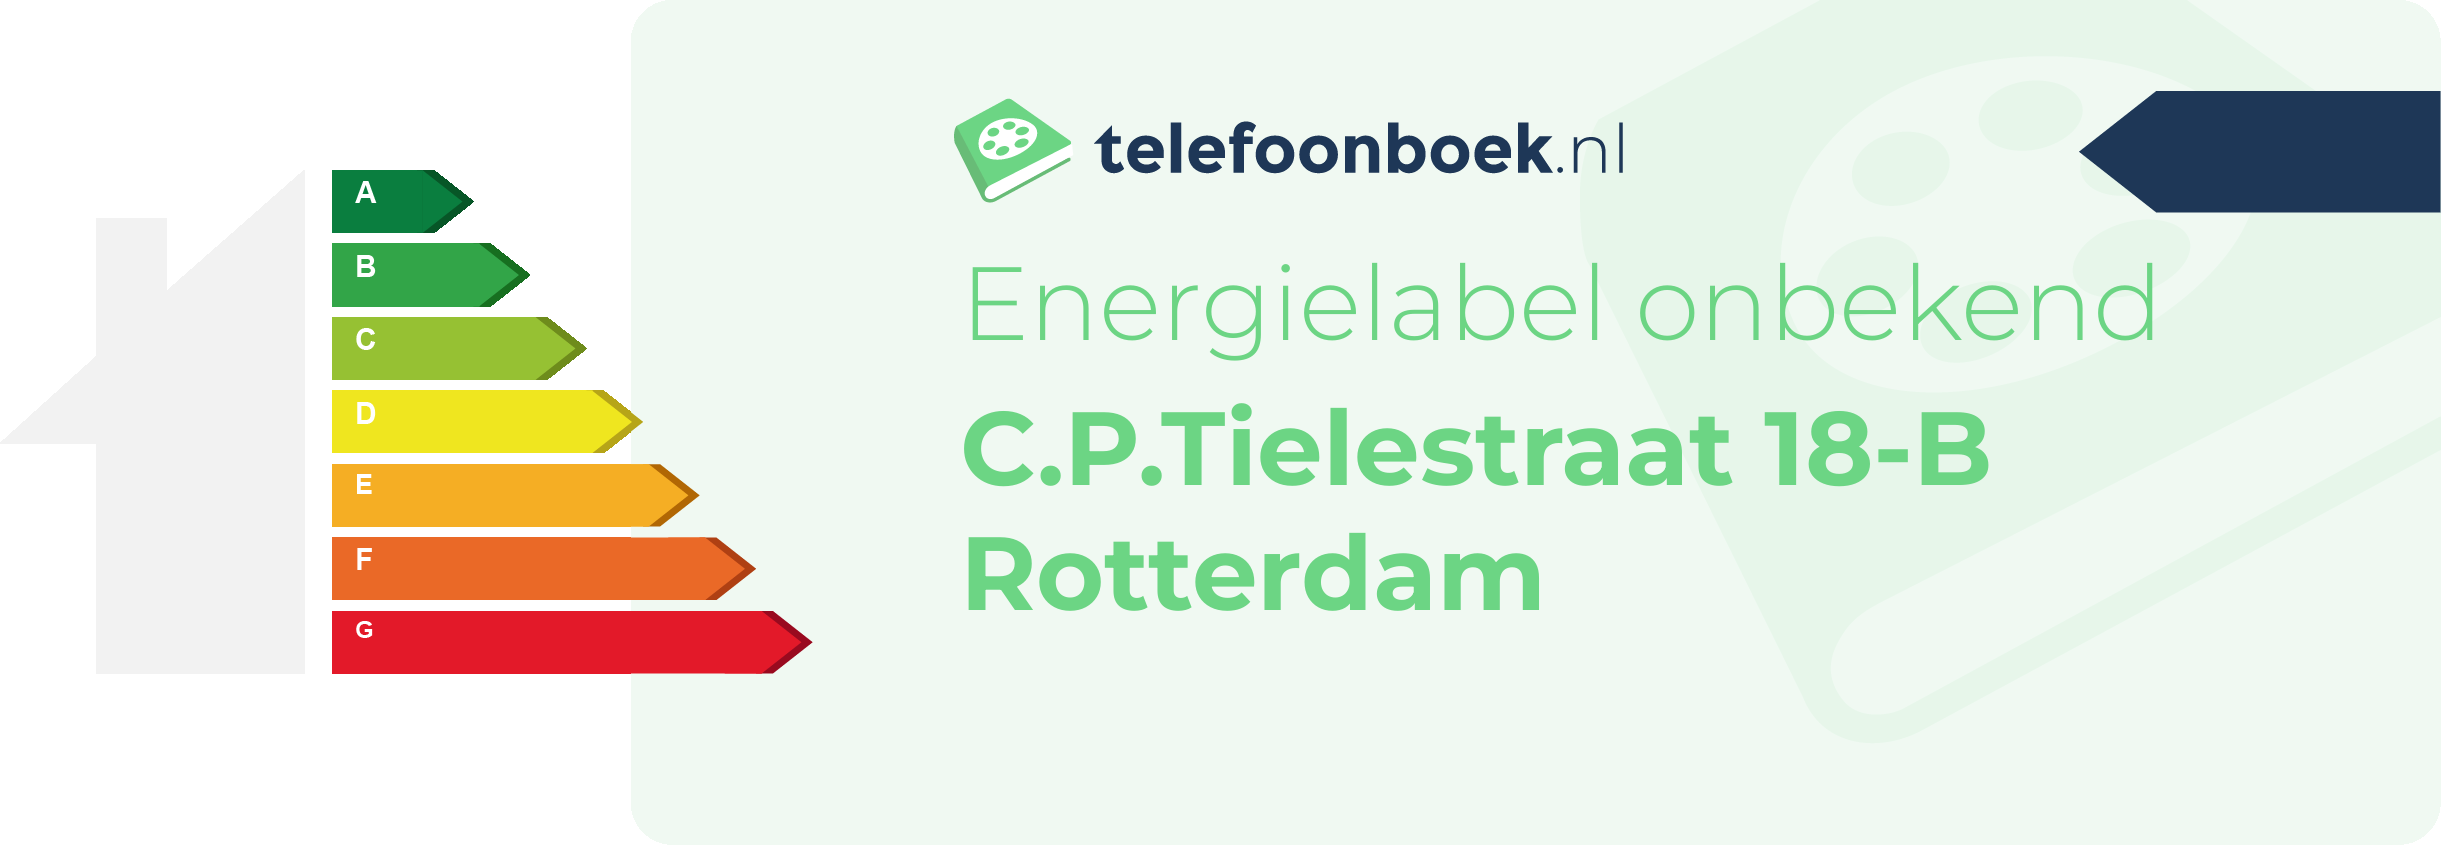 Energielabel C.P.Tielestraat 18-B Rotterdam